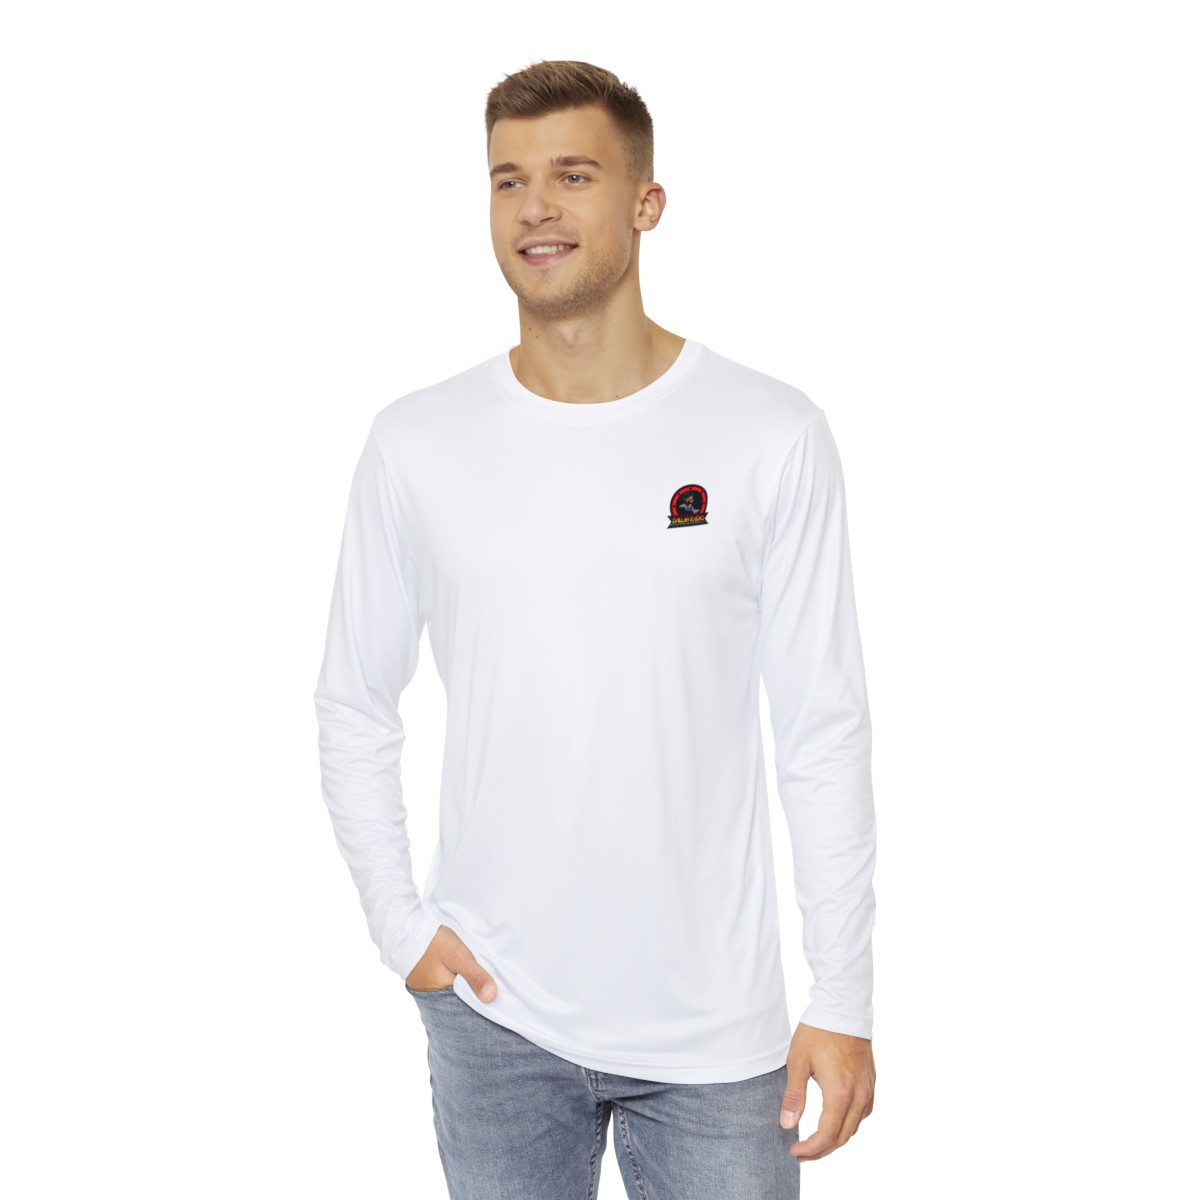 Dallah Radio Men's White Long Sleeve Shirt product thumbnail image